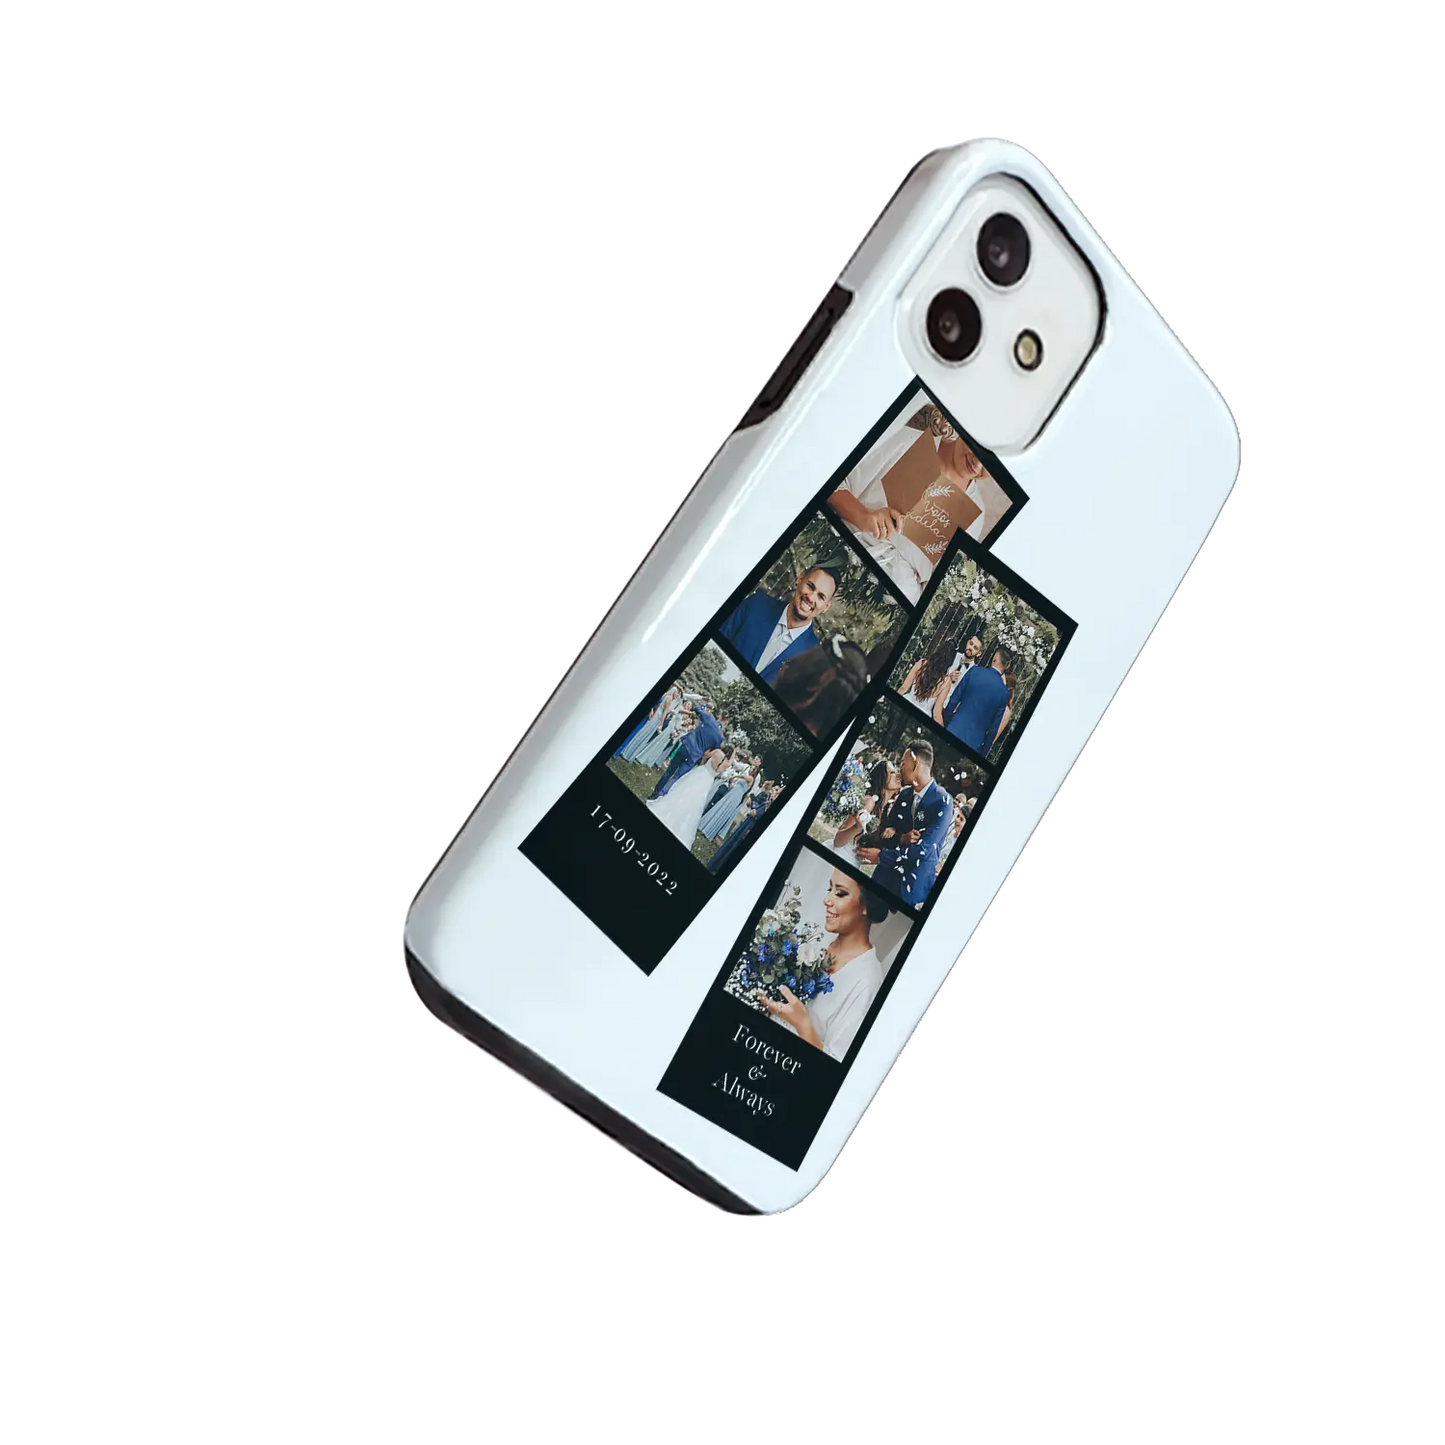 Picture Strip Duo - Custom Galaxy S Case